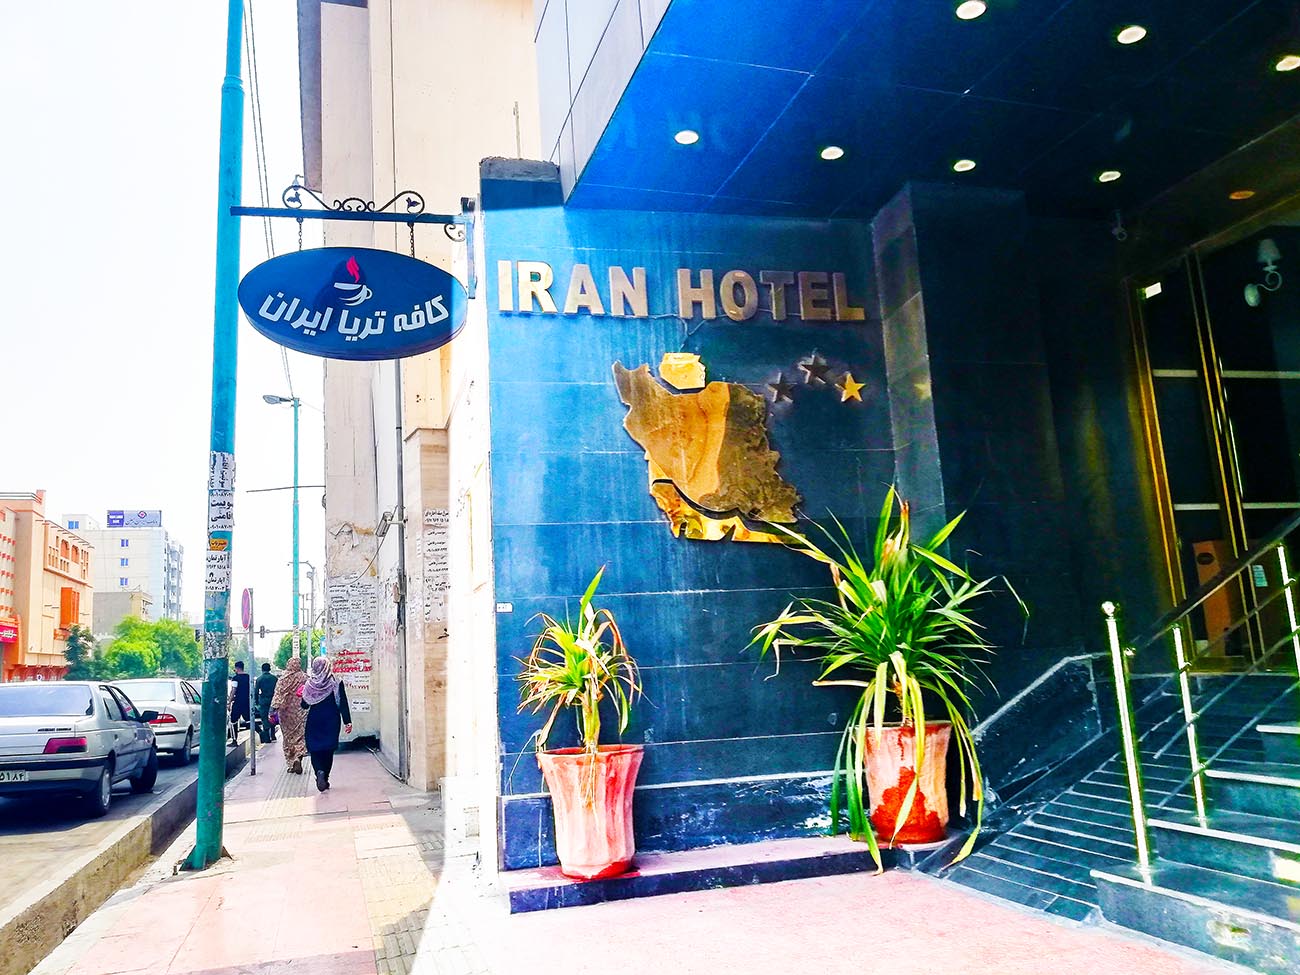 Iran hotel in Bandar Abbas